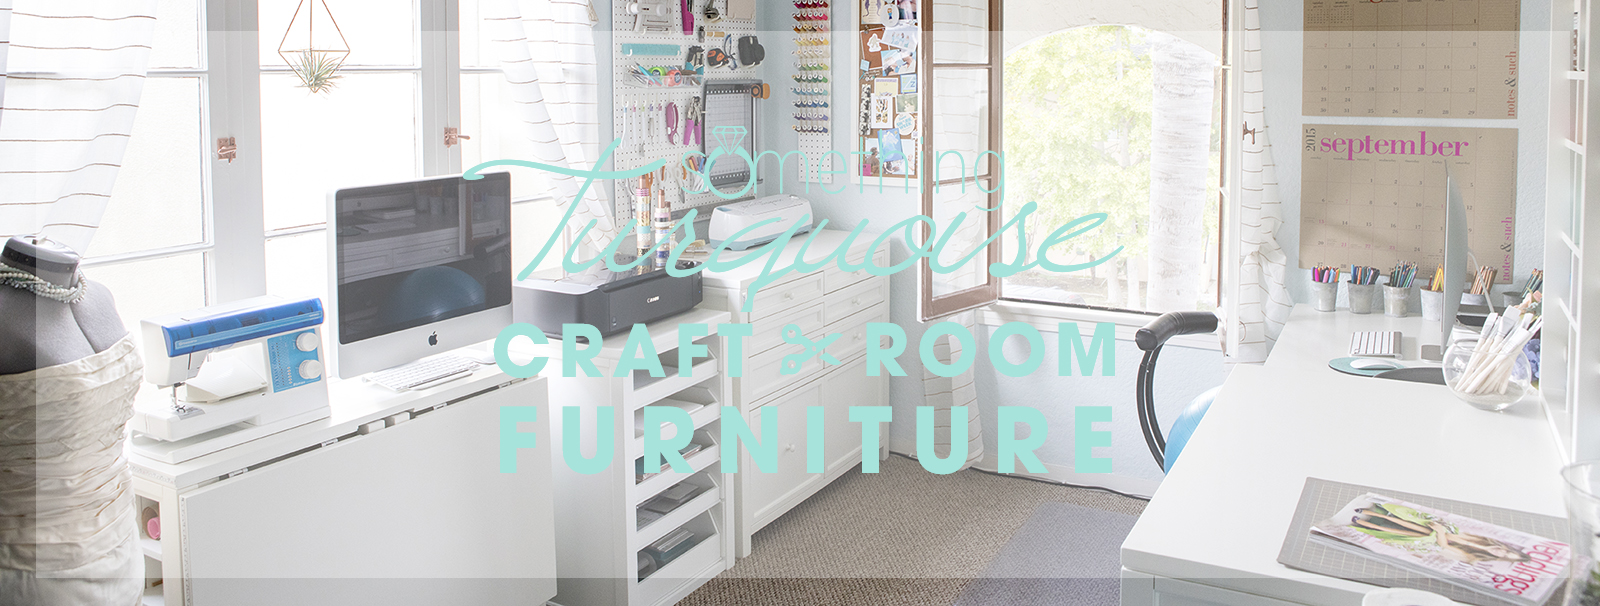 Something Turquoise Craft Room + Blog Office full of Martha Stewart Craft Furniture